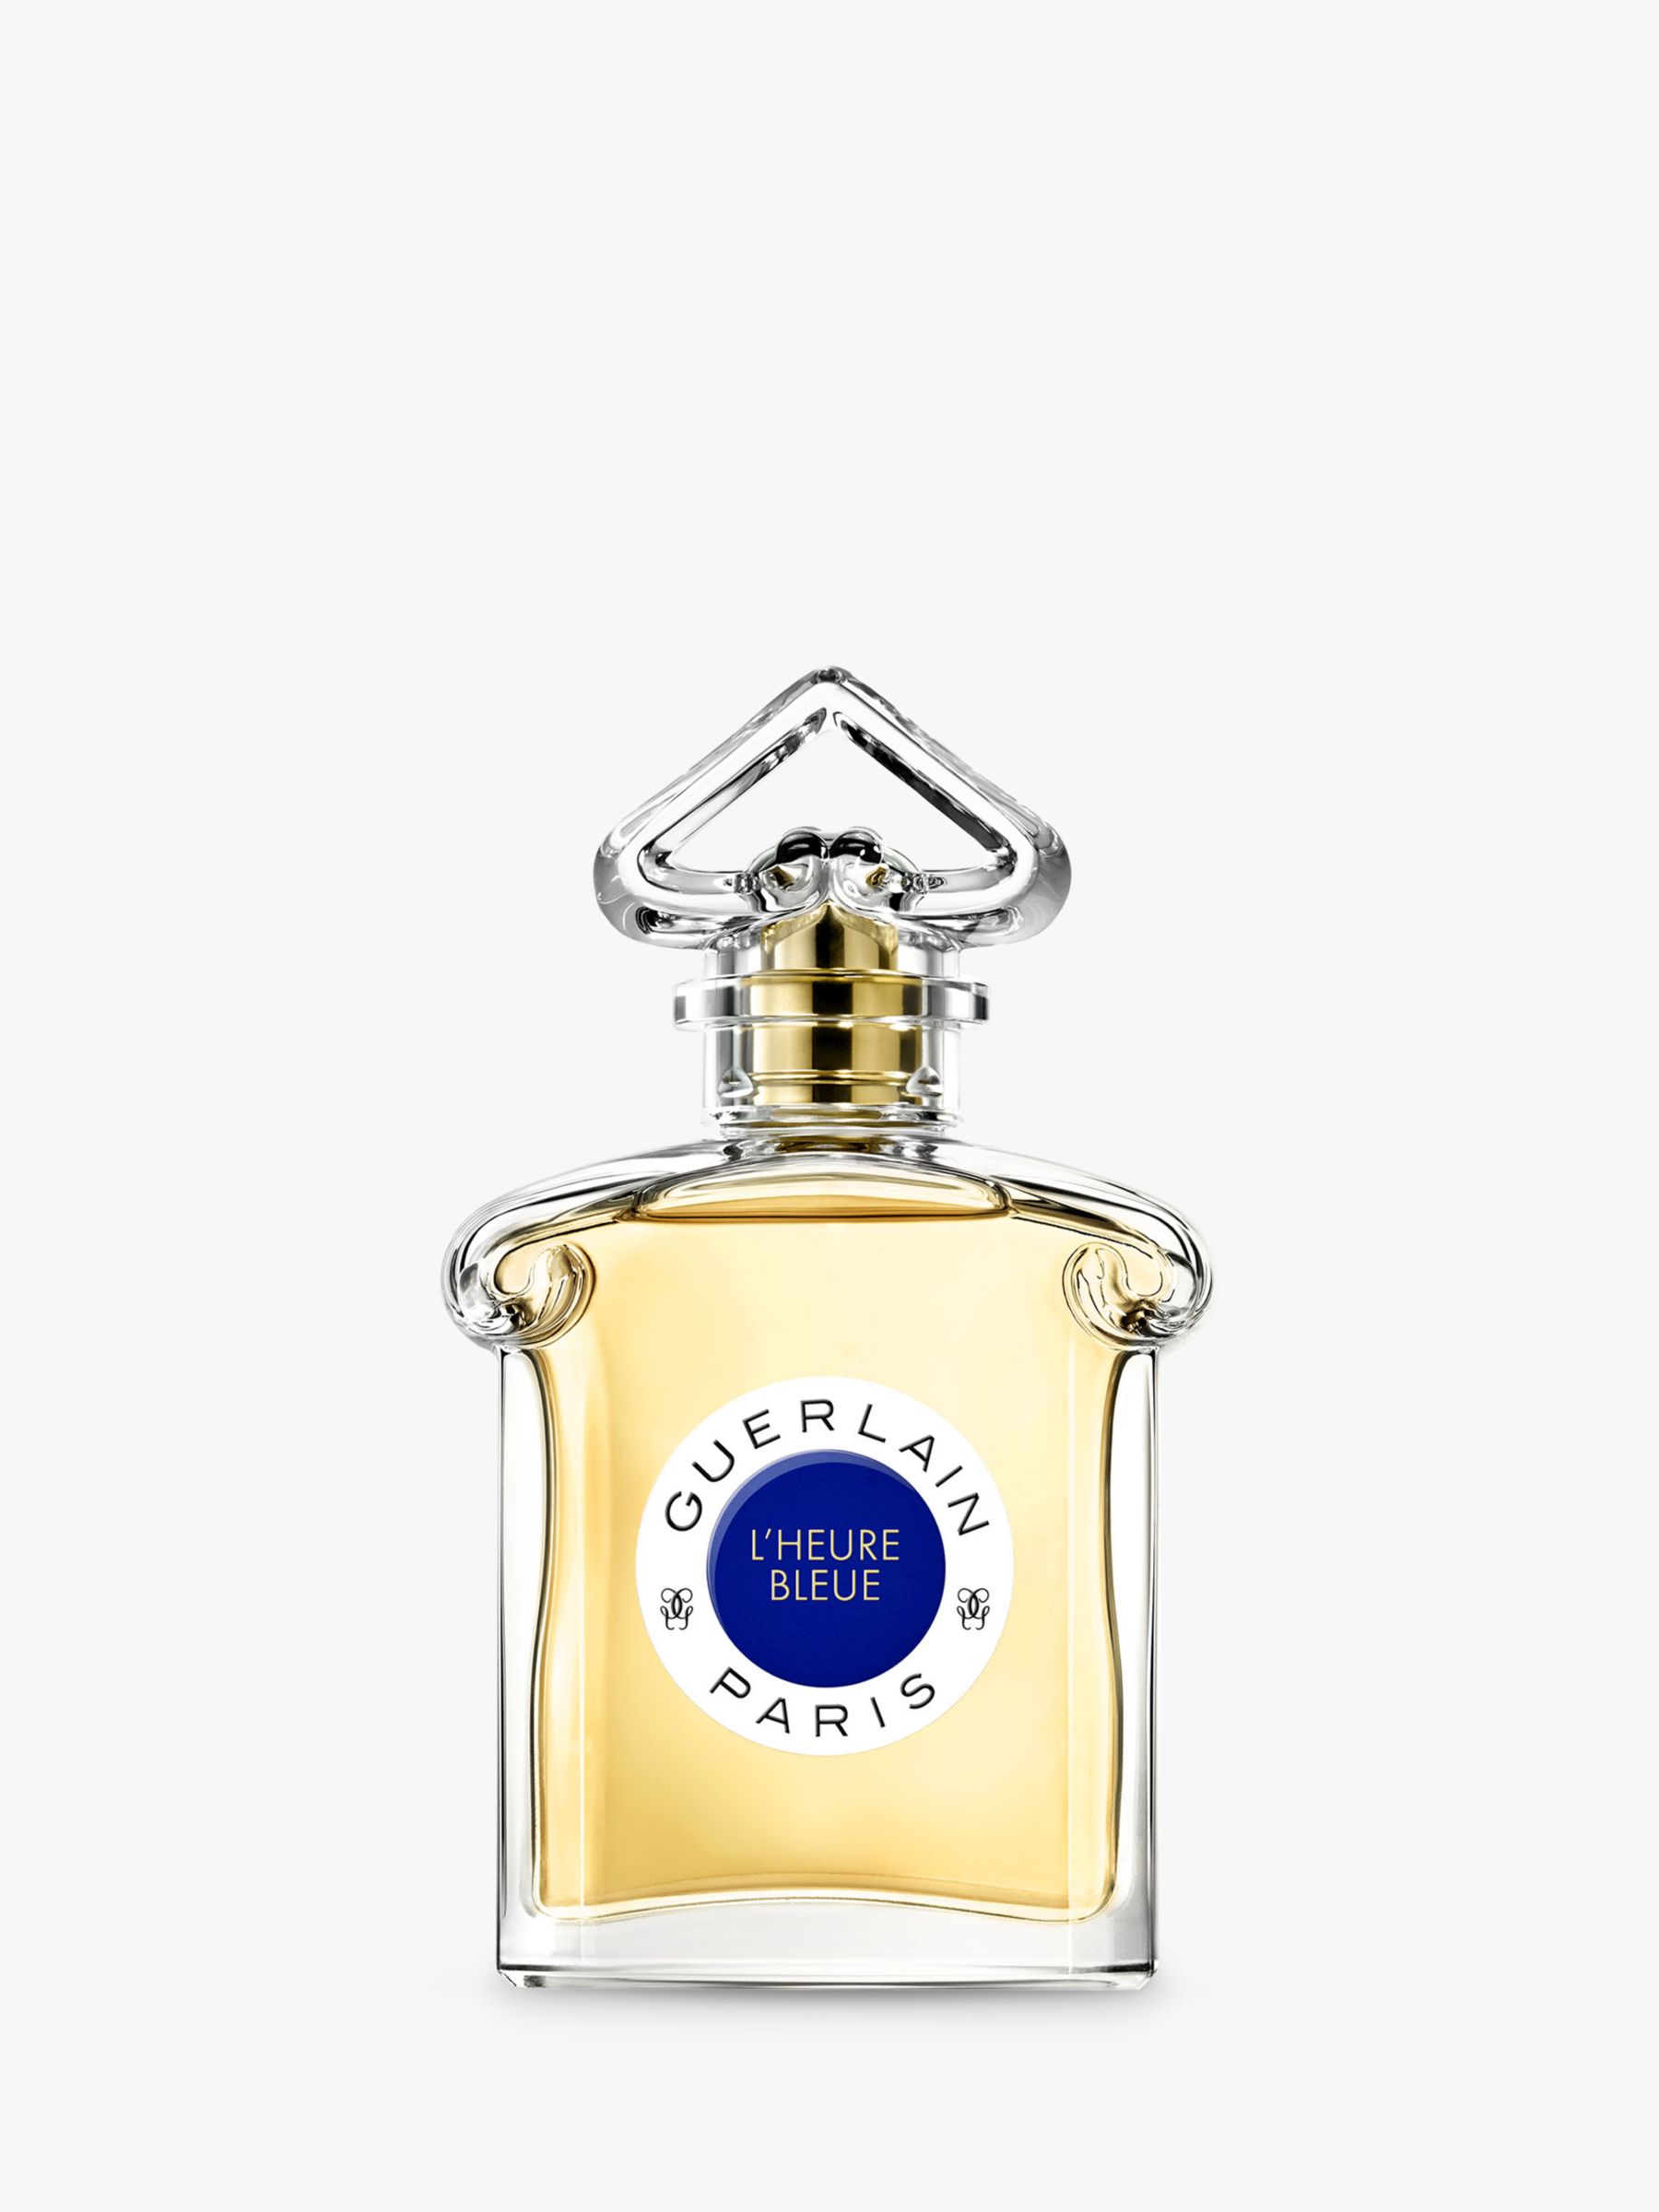 Rare Vintage Guerlain L' HEURE BLEUE Huge Original Perfume 16.9 Oz France  New 